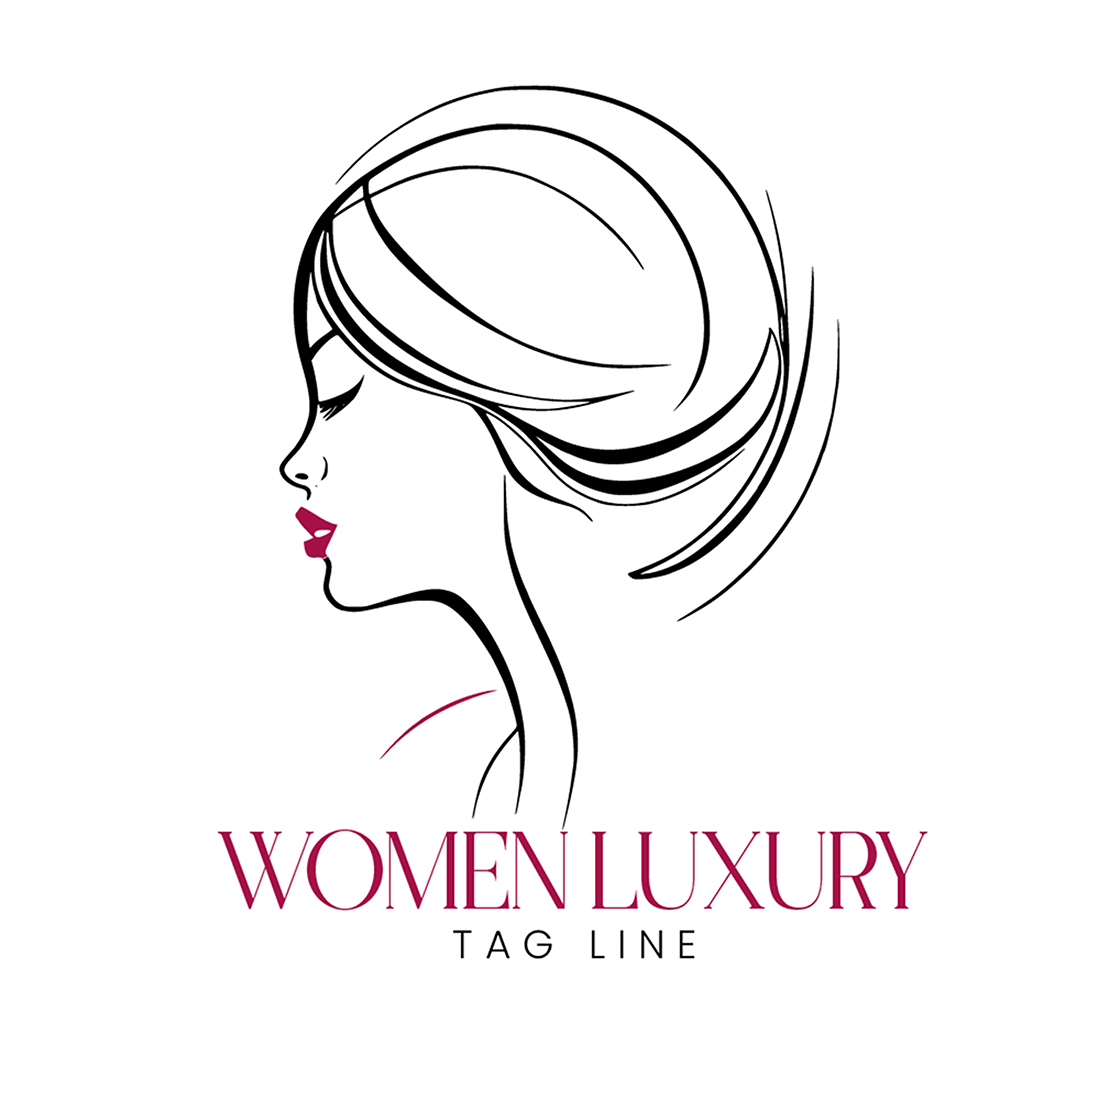 female fashion logo cover image.